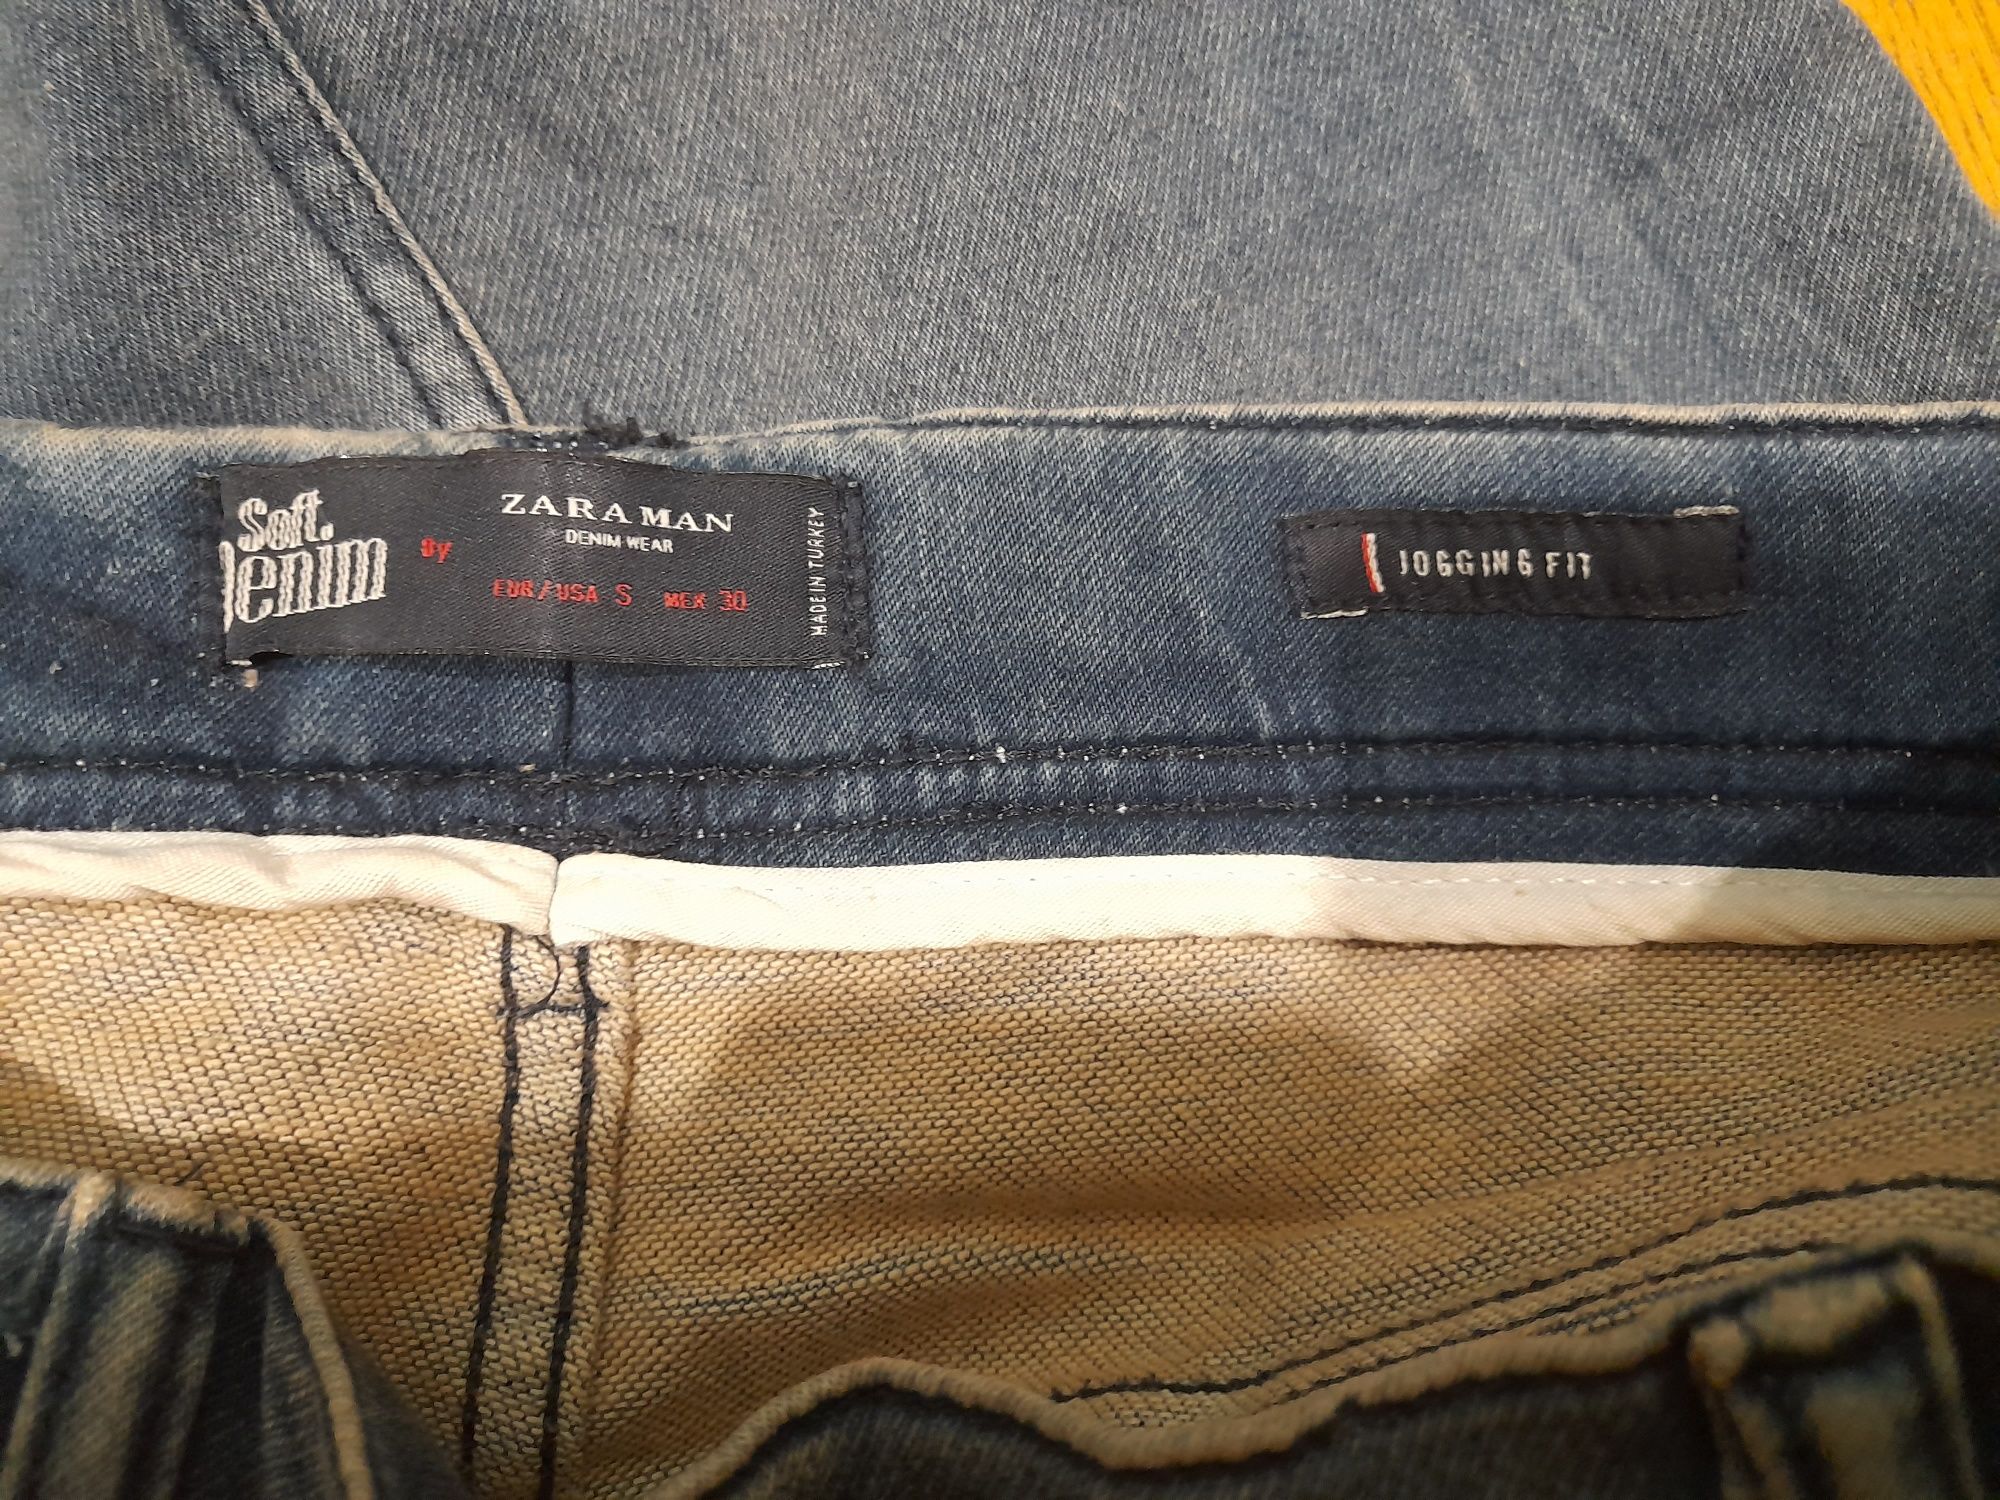 Zara man soft denim мужские джогеры джинсы S